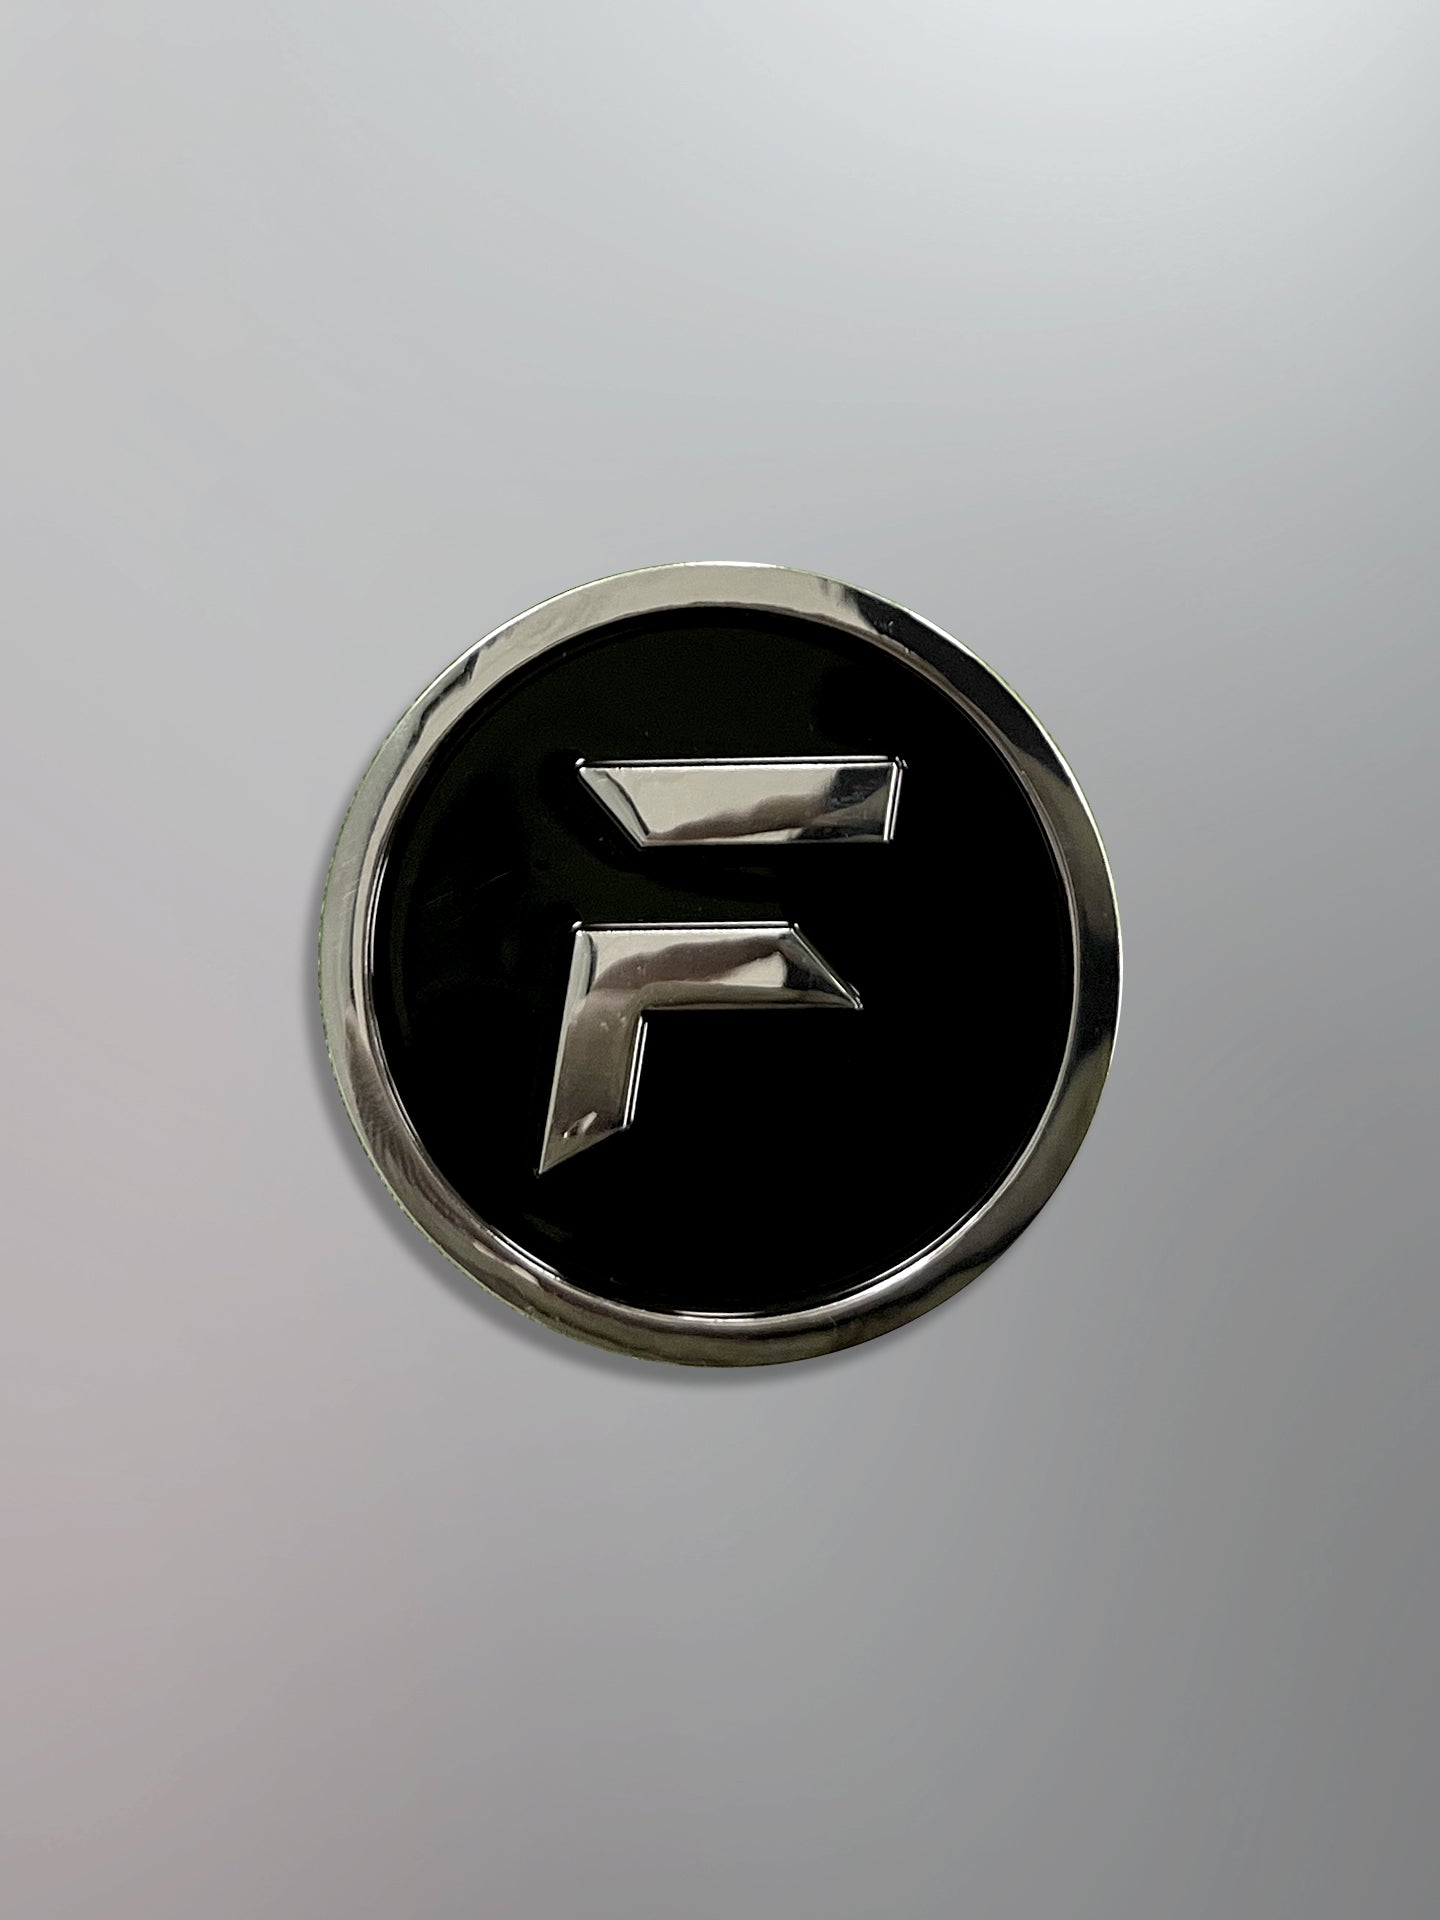 Fight The Fade - 2" Logo Pin